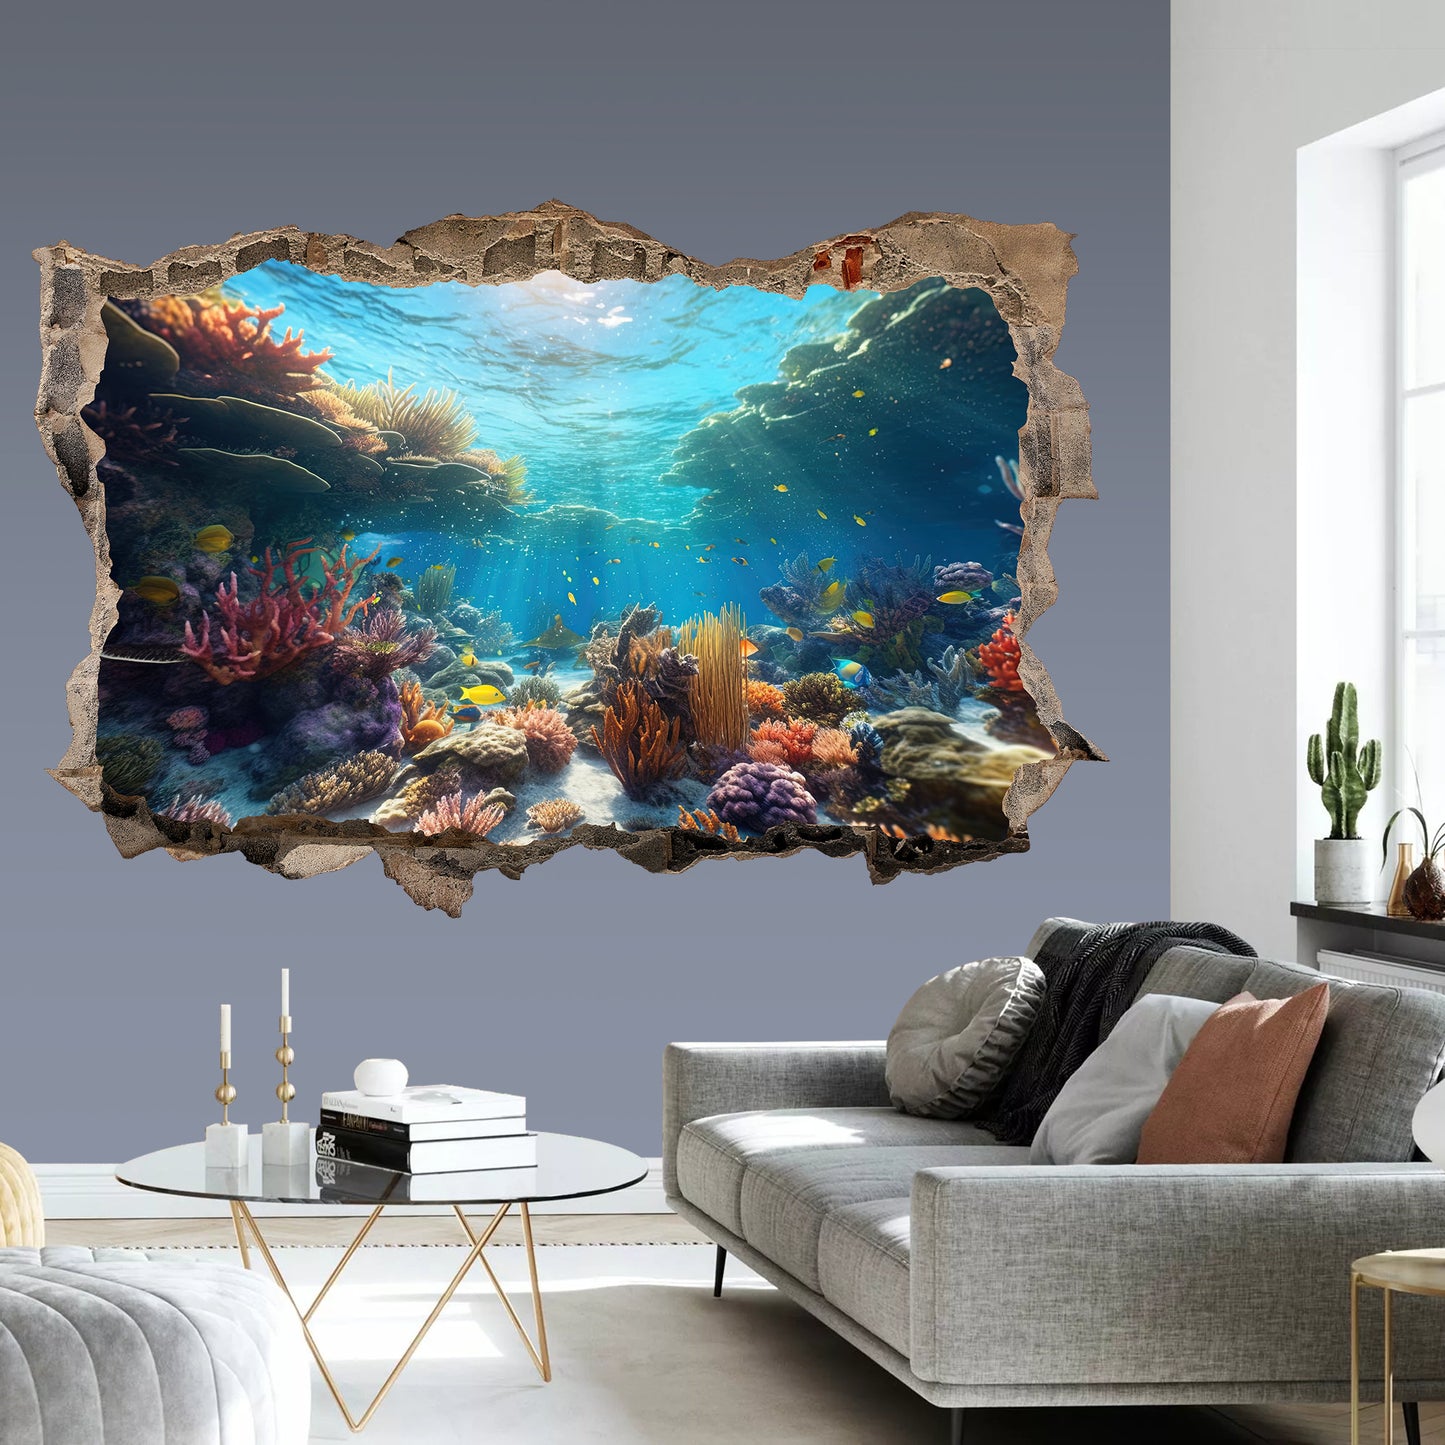 Undersea Wonderland 3D Wall Decal - Colorful Ocean World Behind Broken Wall - BW013